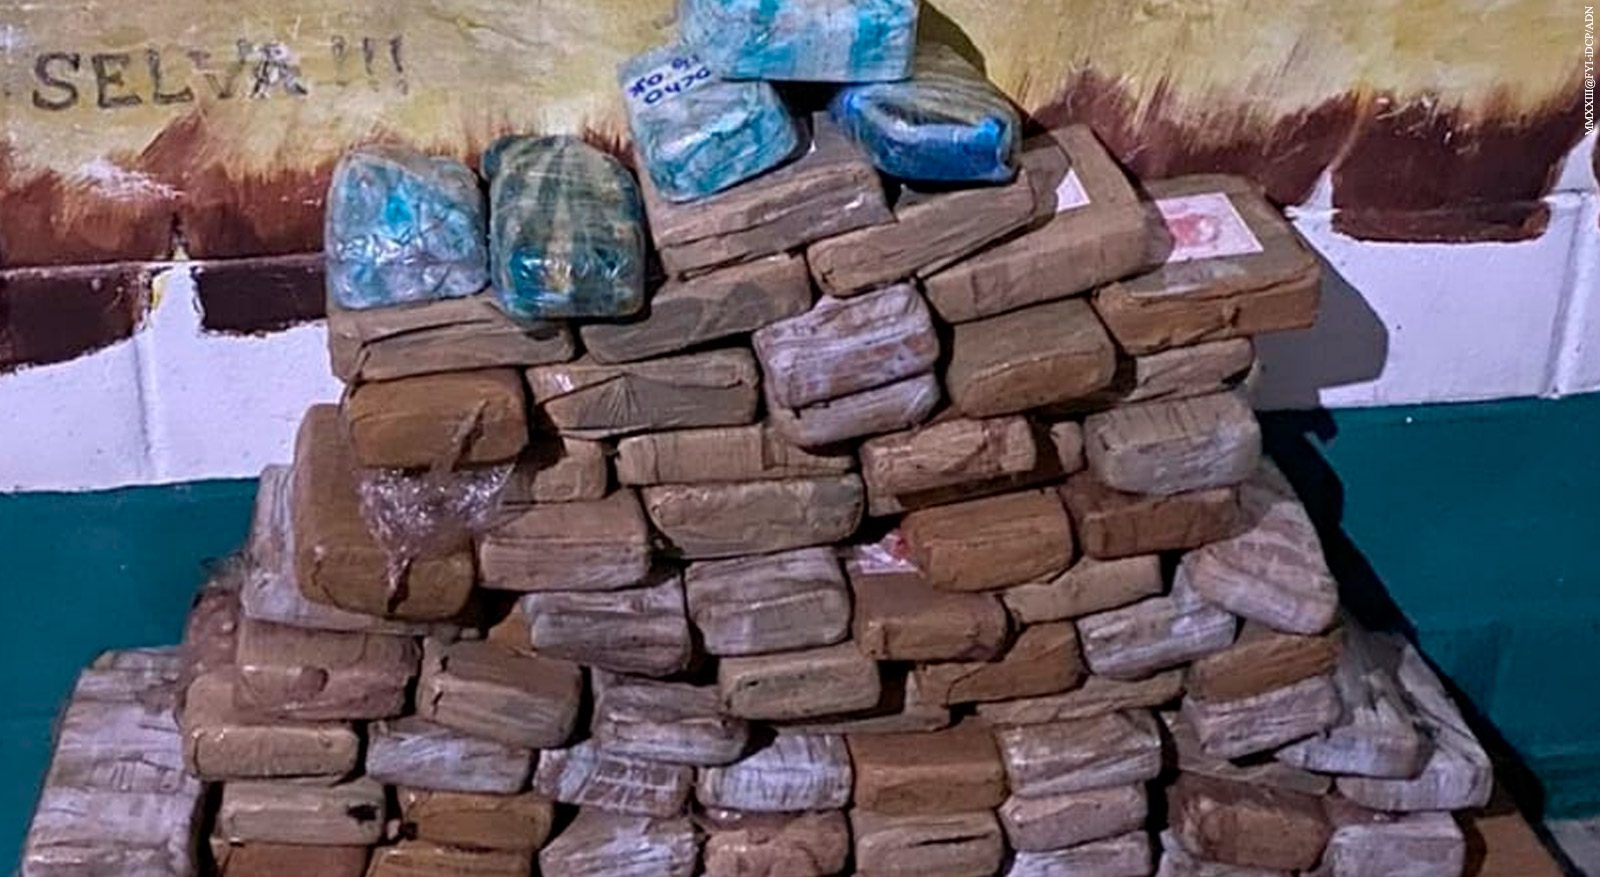 Brazilian army's 3rd Special Border Platoon seizes 110 kilos of drugs